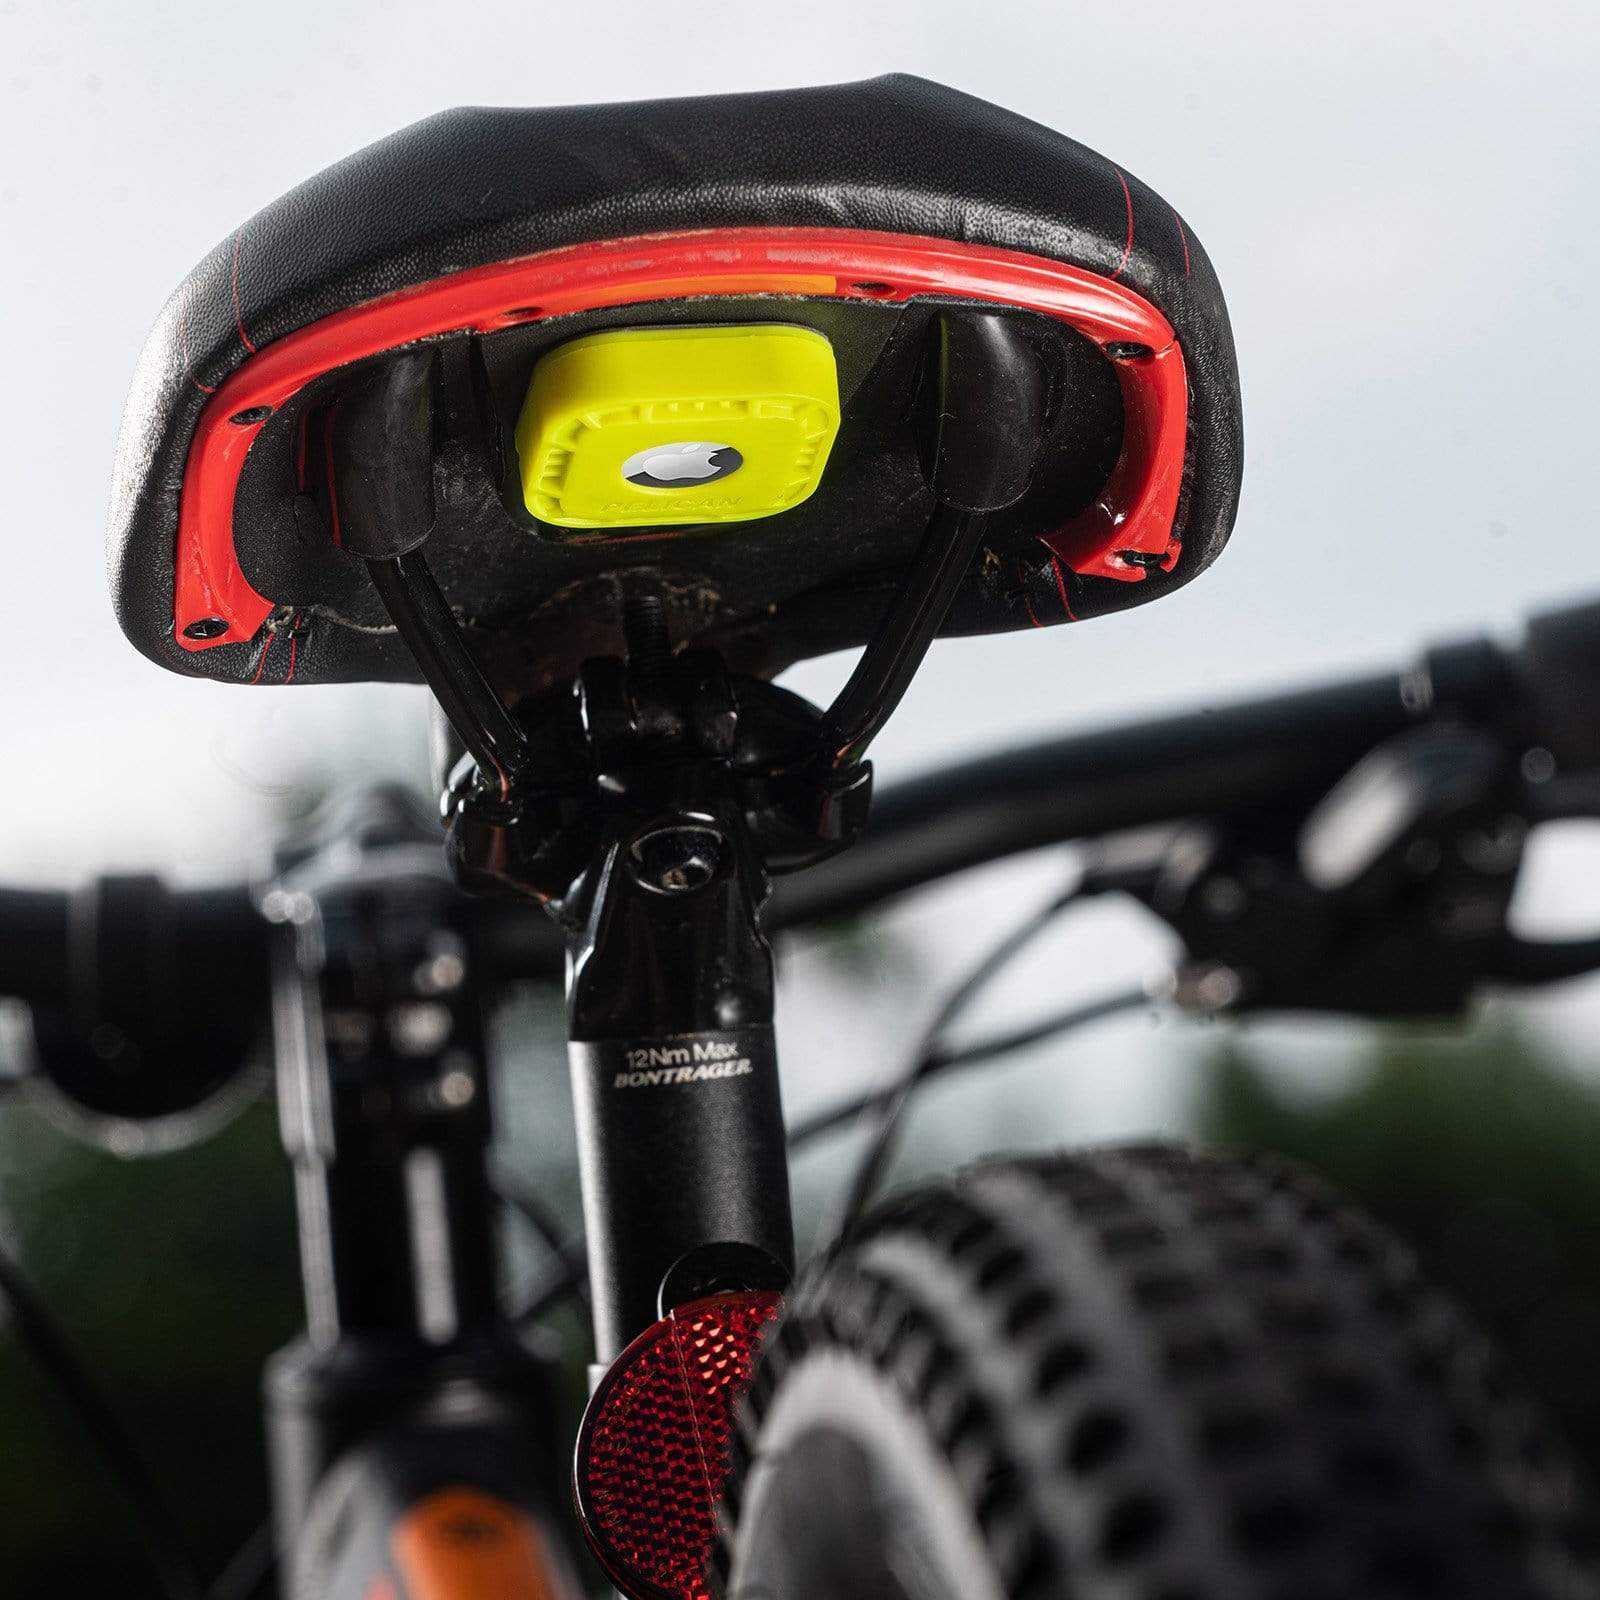 Sticker mount attached to bike. color::Black/Orange/Hi-Vis Yellow/Gray